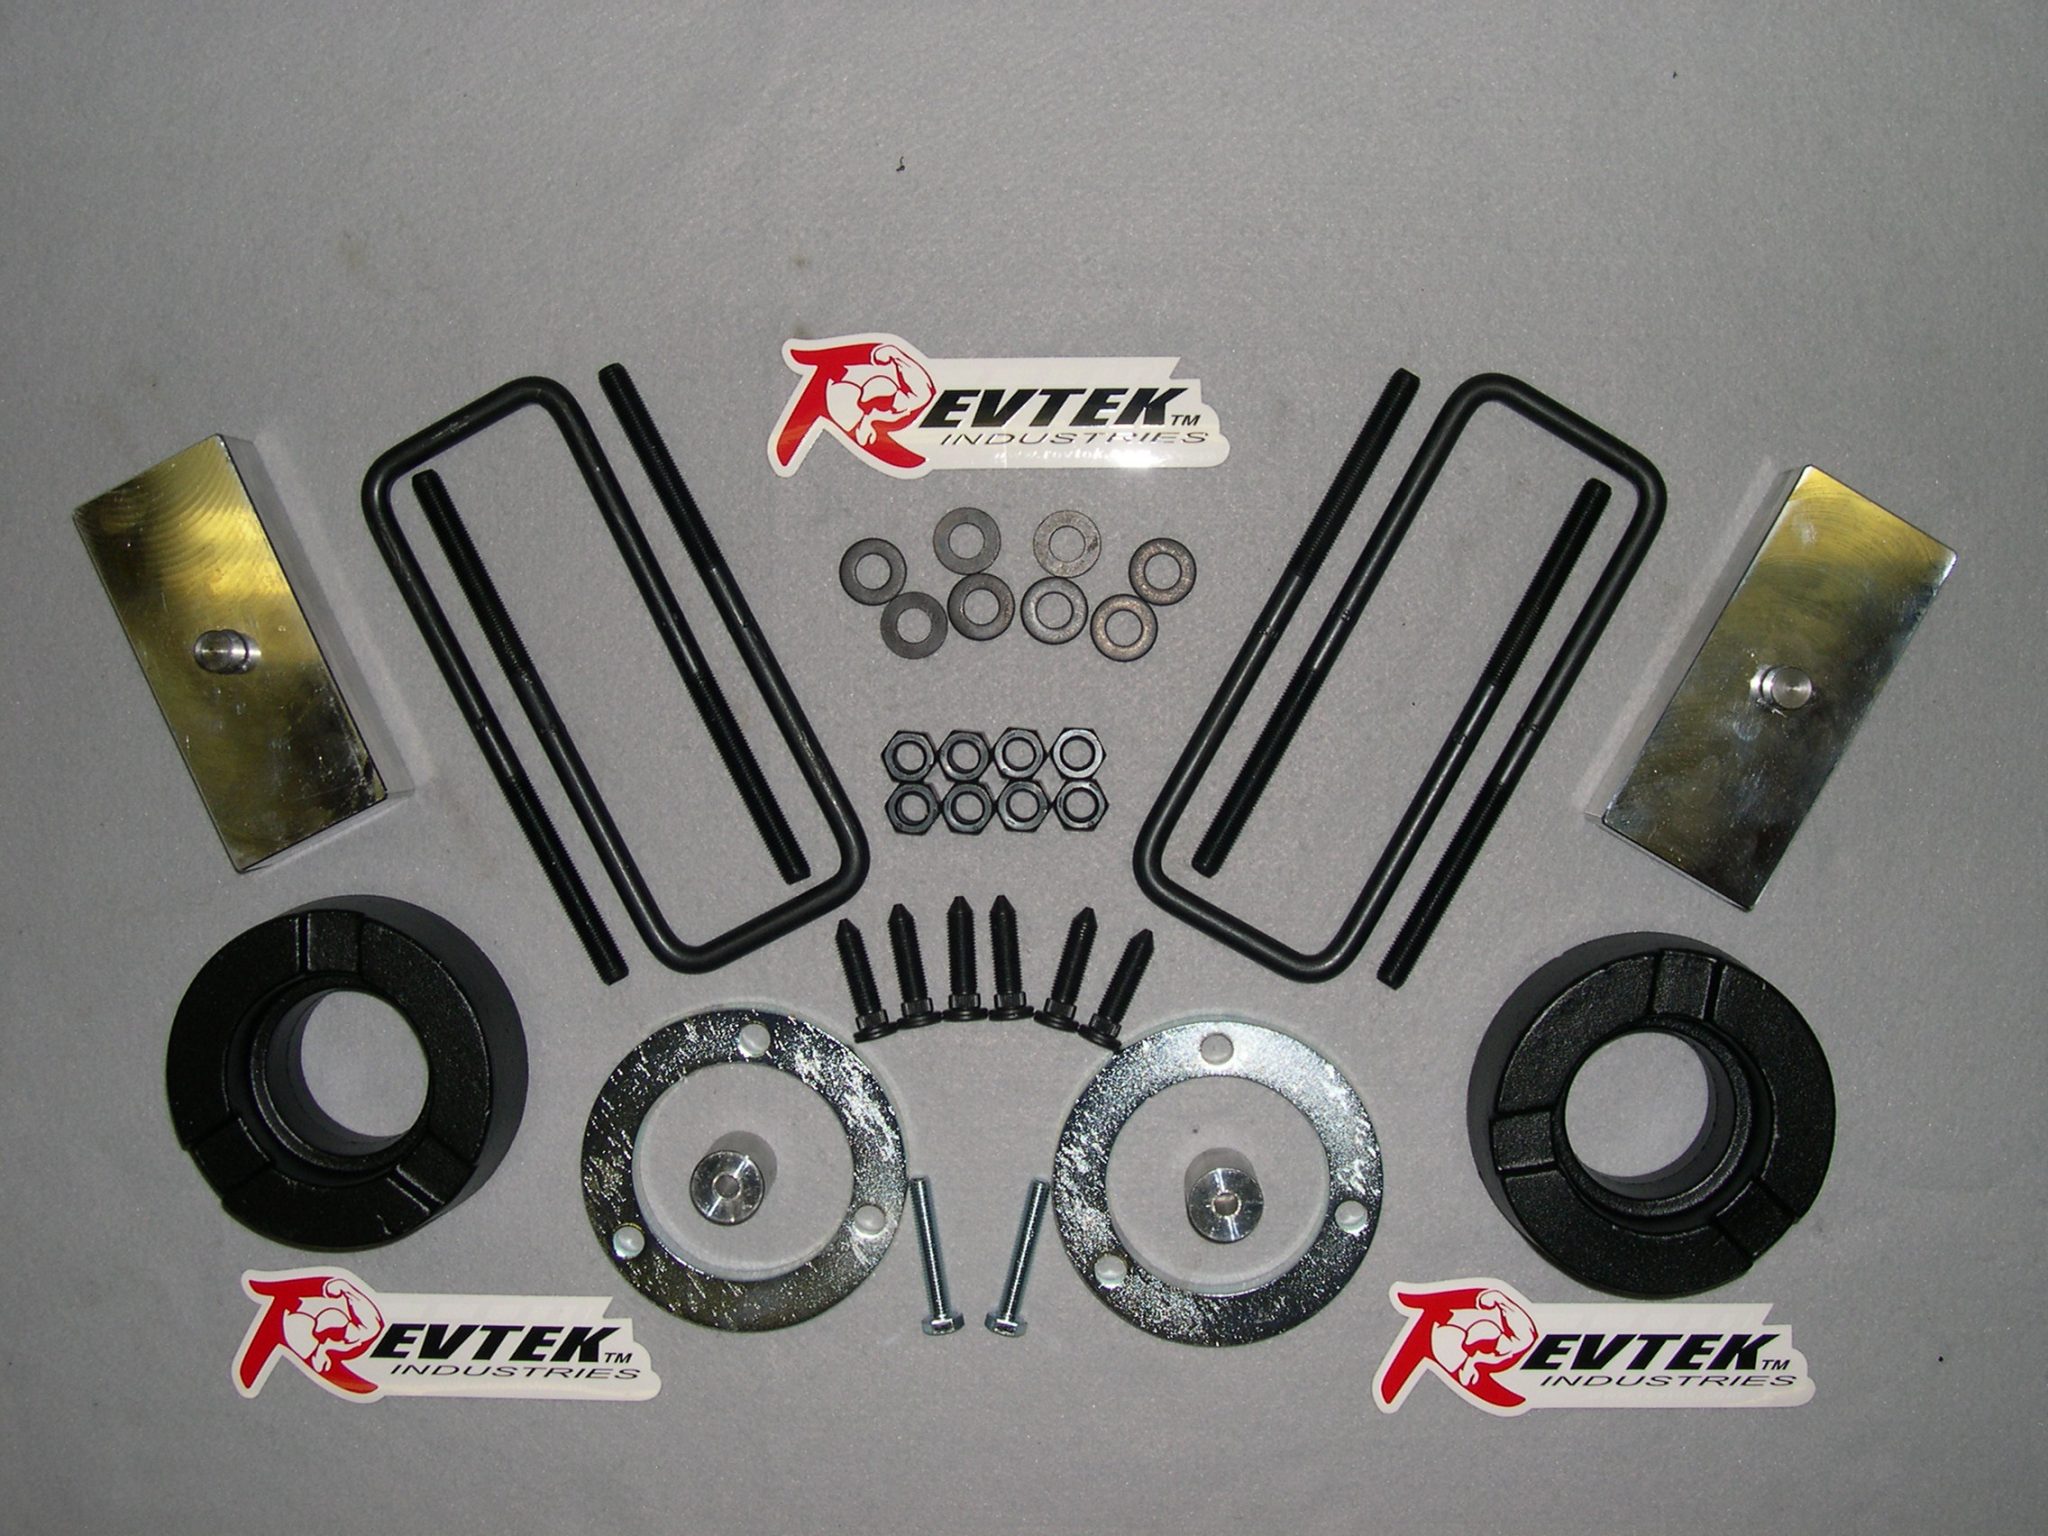 2006 Nissan frontier suspension lift kits